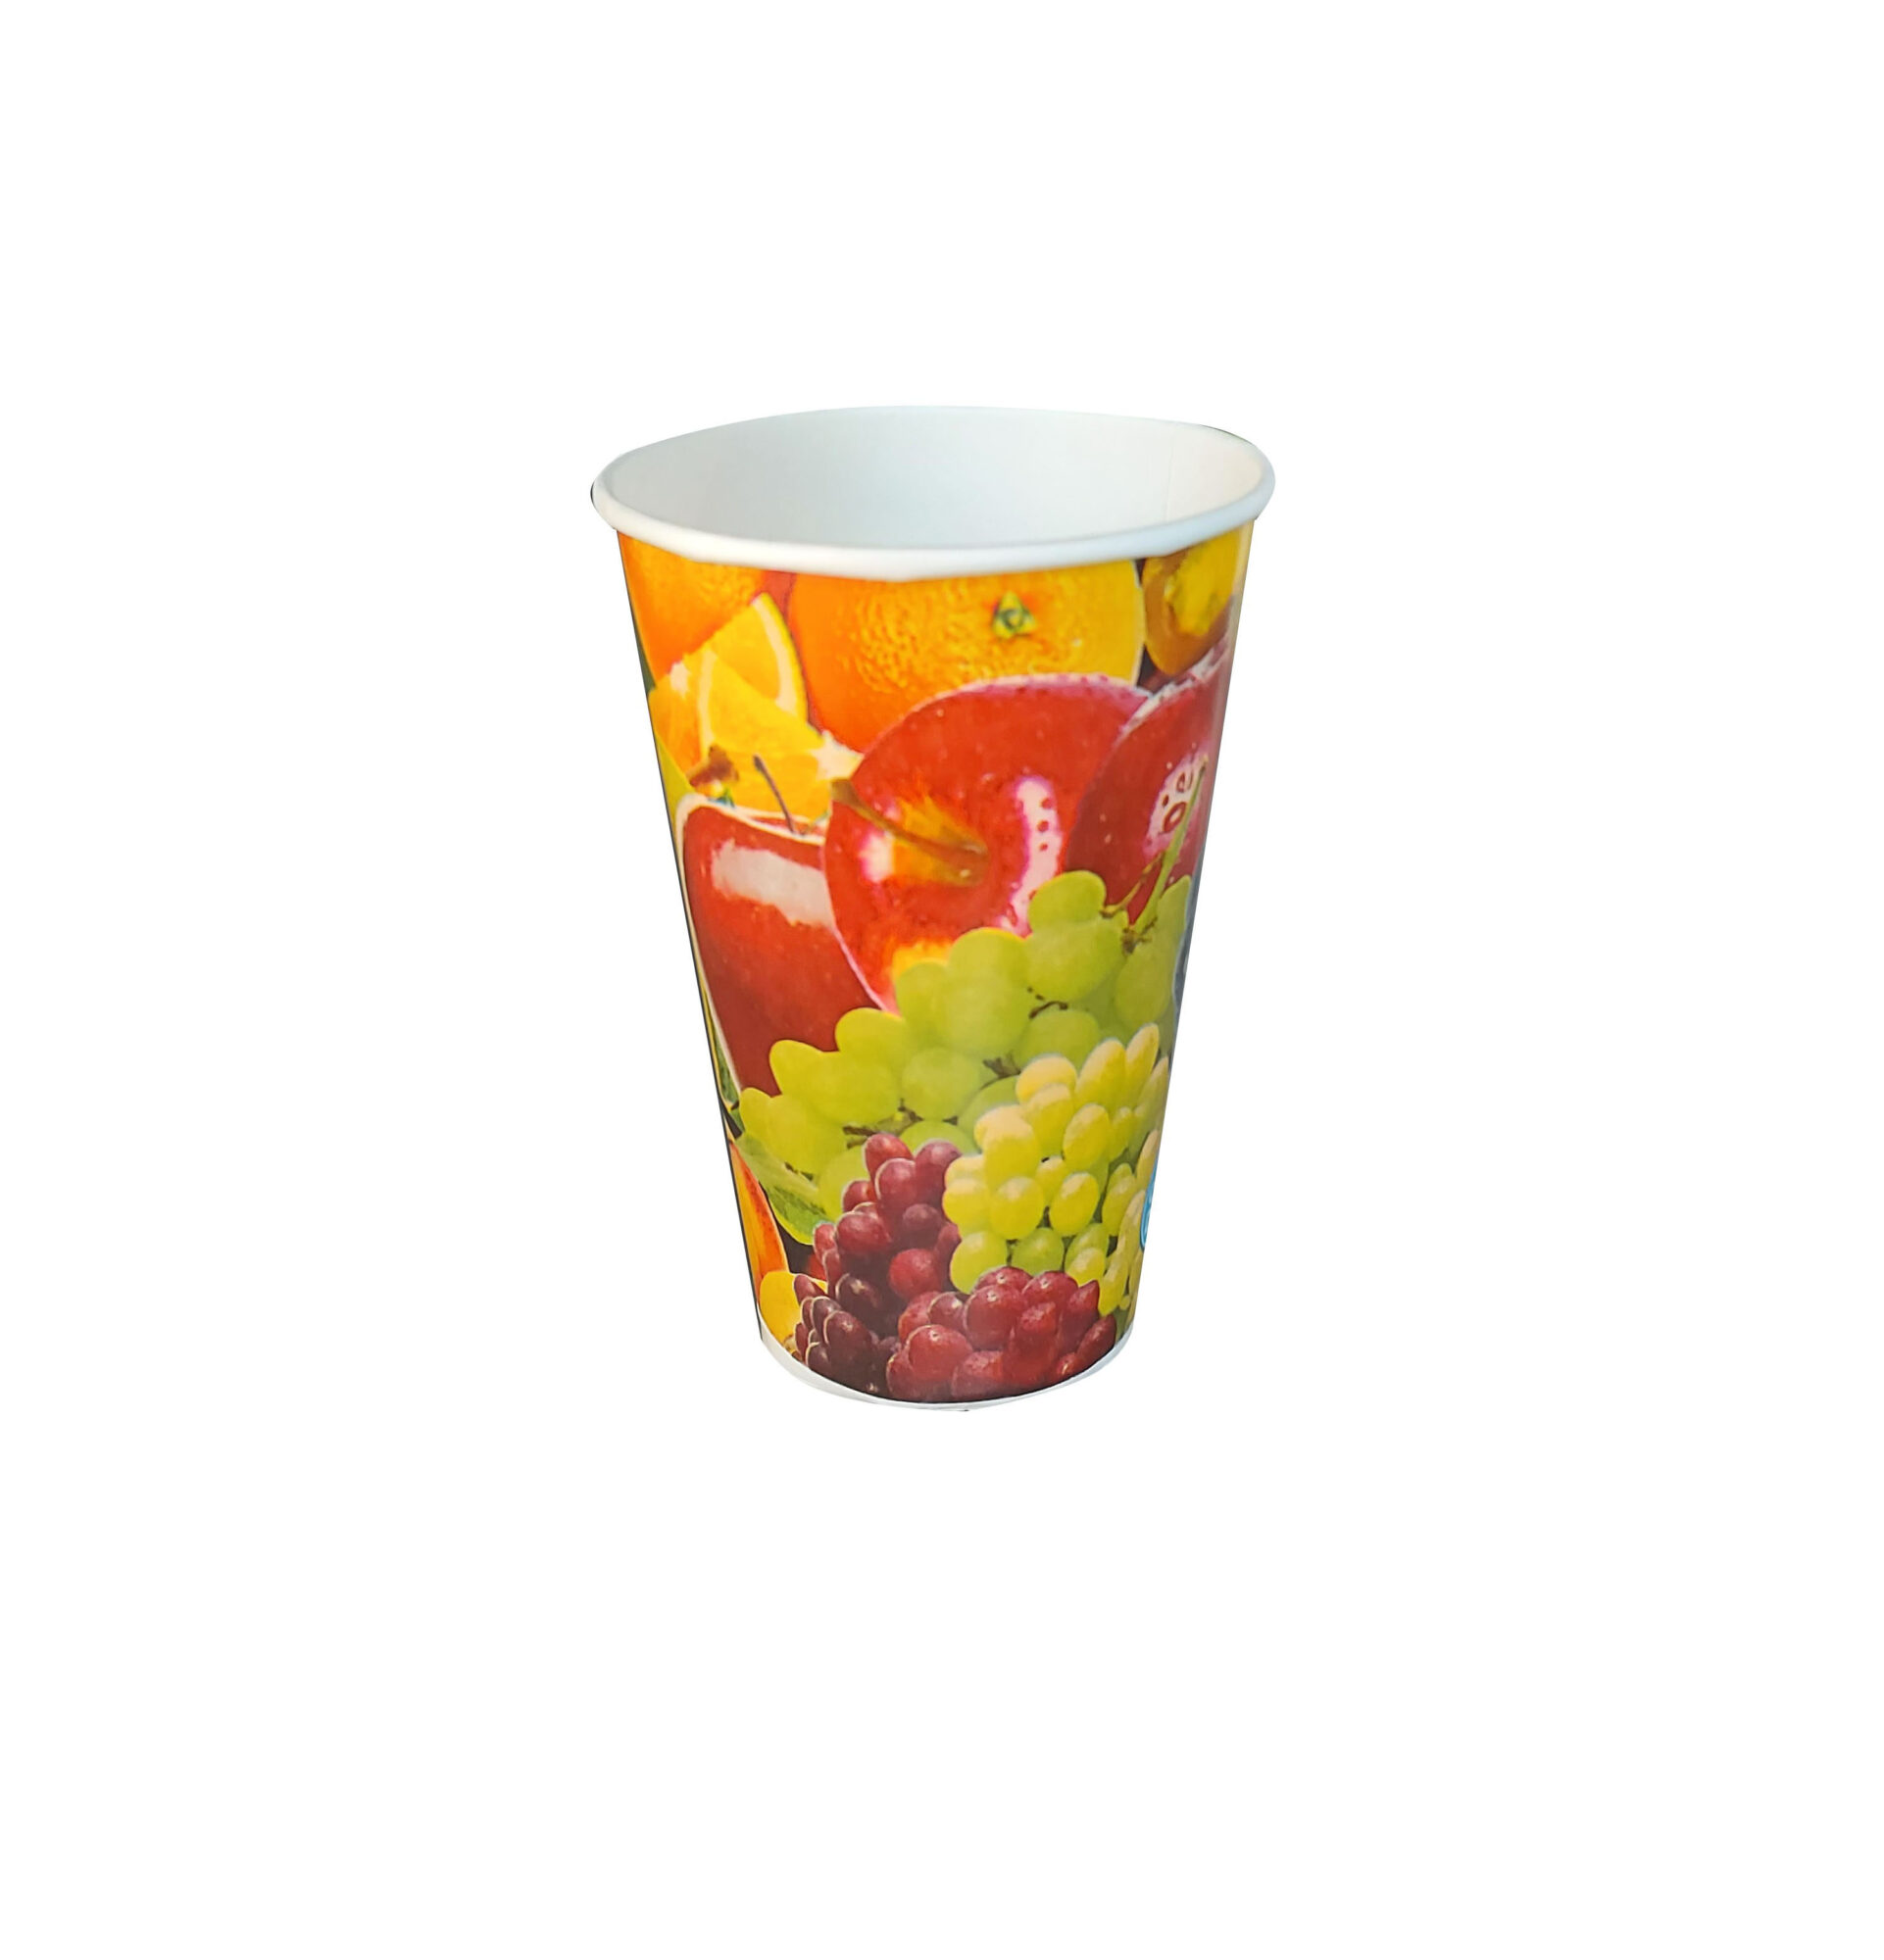 https://afrahpack.com/wp-content/uploads/2021/09/Juice-cup-1.jpg